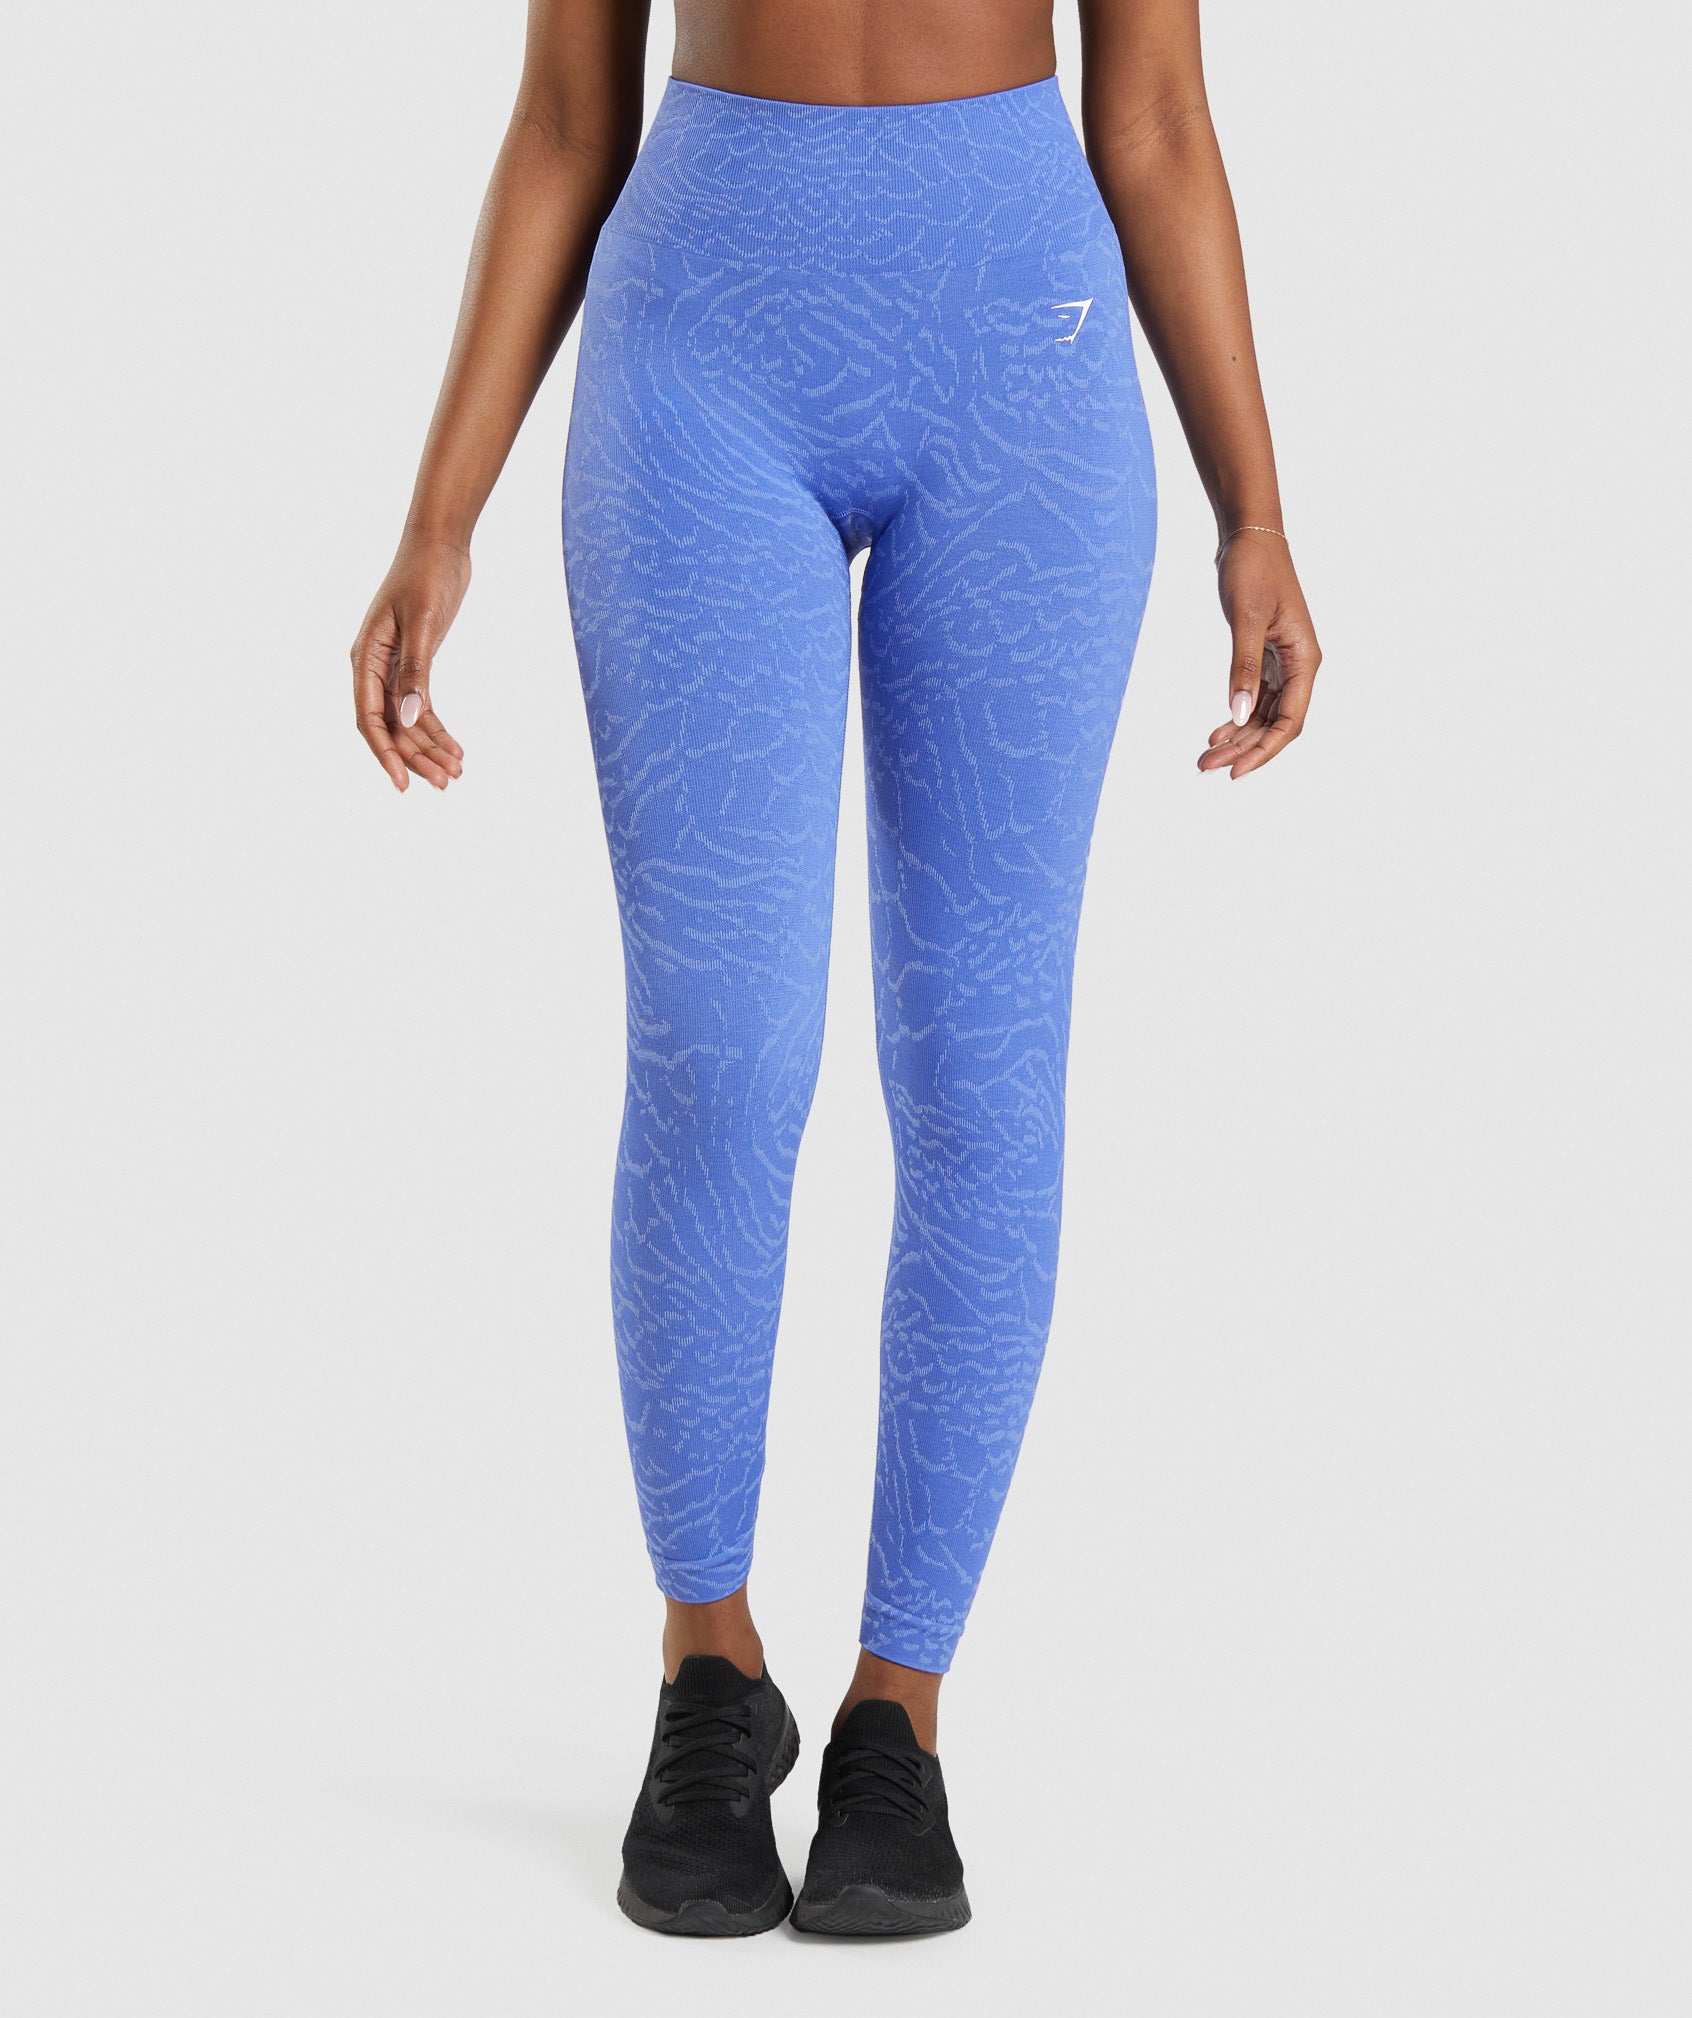 Gymshark Studio Leggings Blue - $45 (10% Off Retail) - From Adrianna